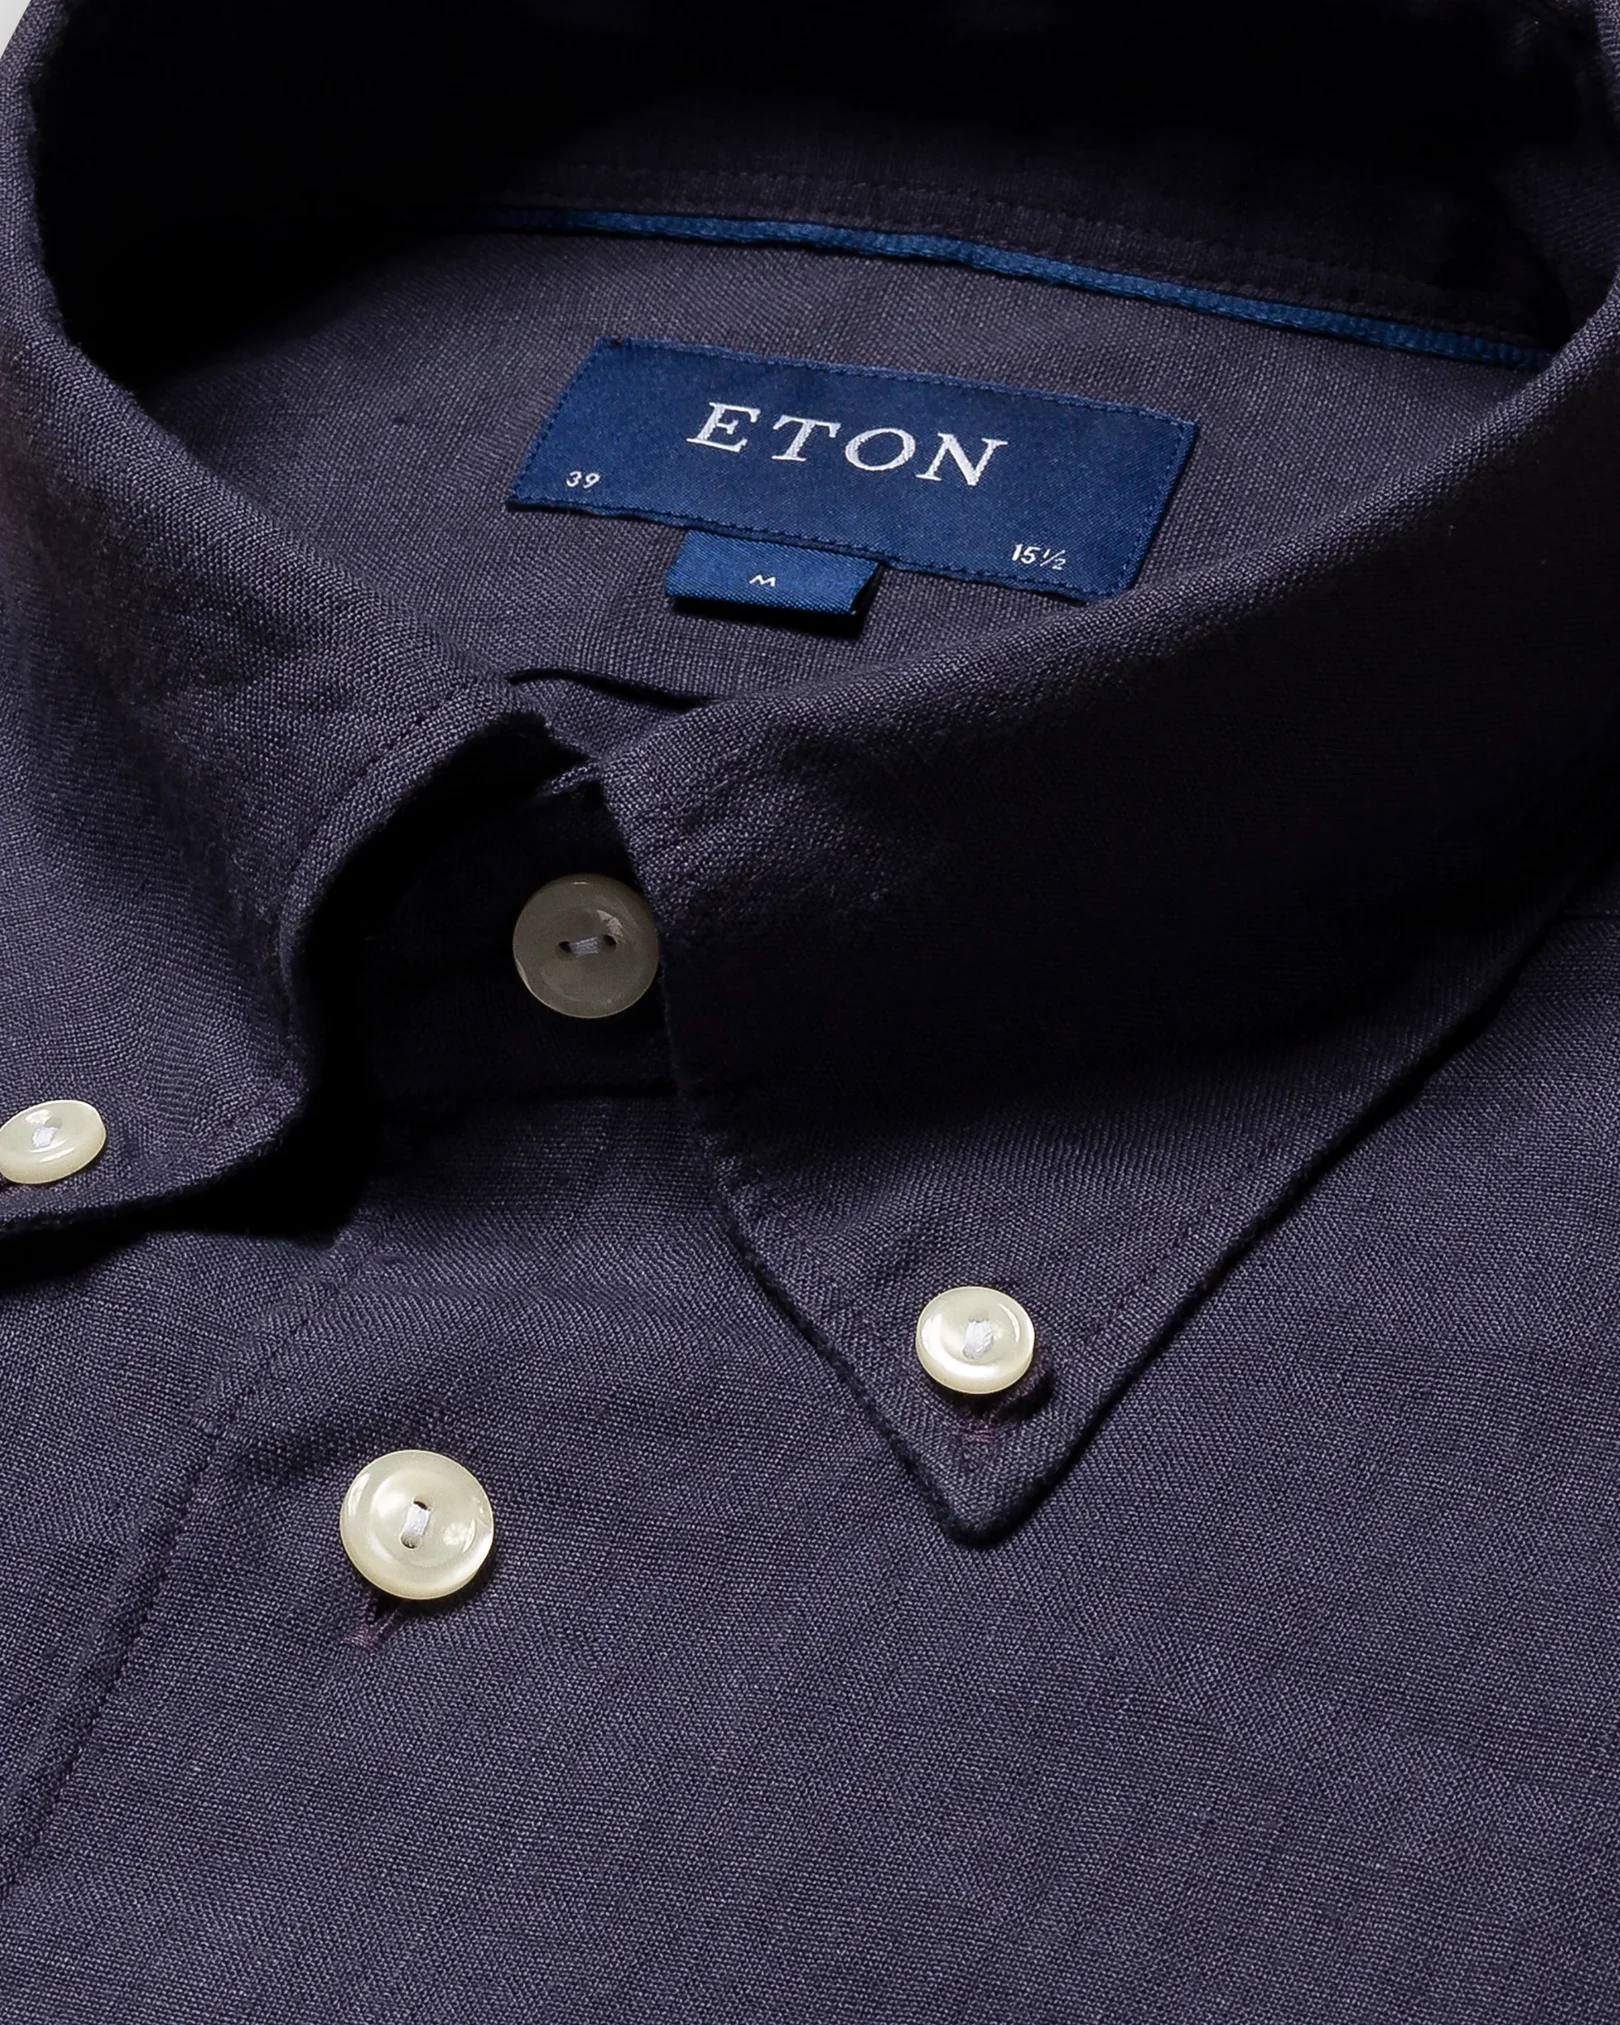 Eton - navy blue linen button down